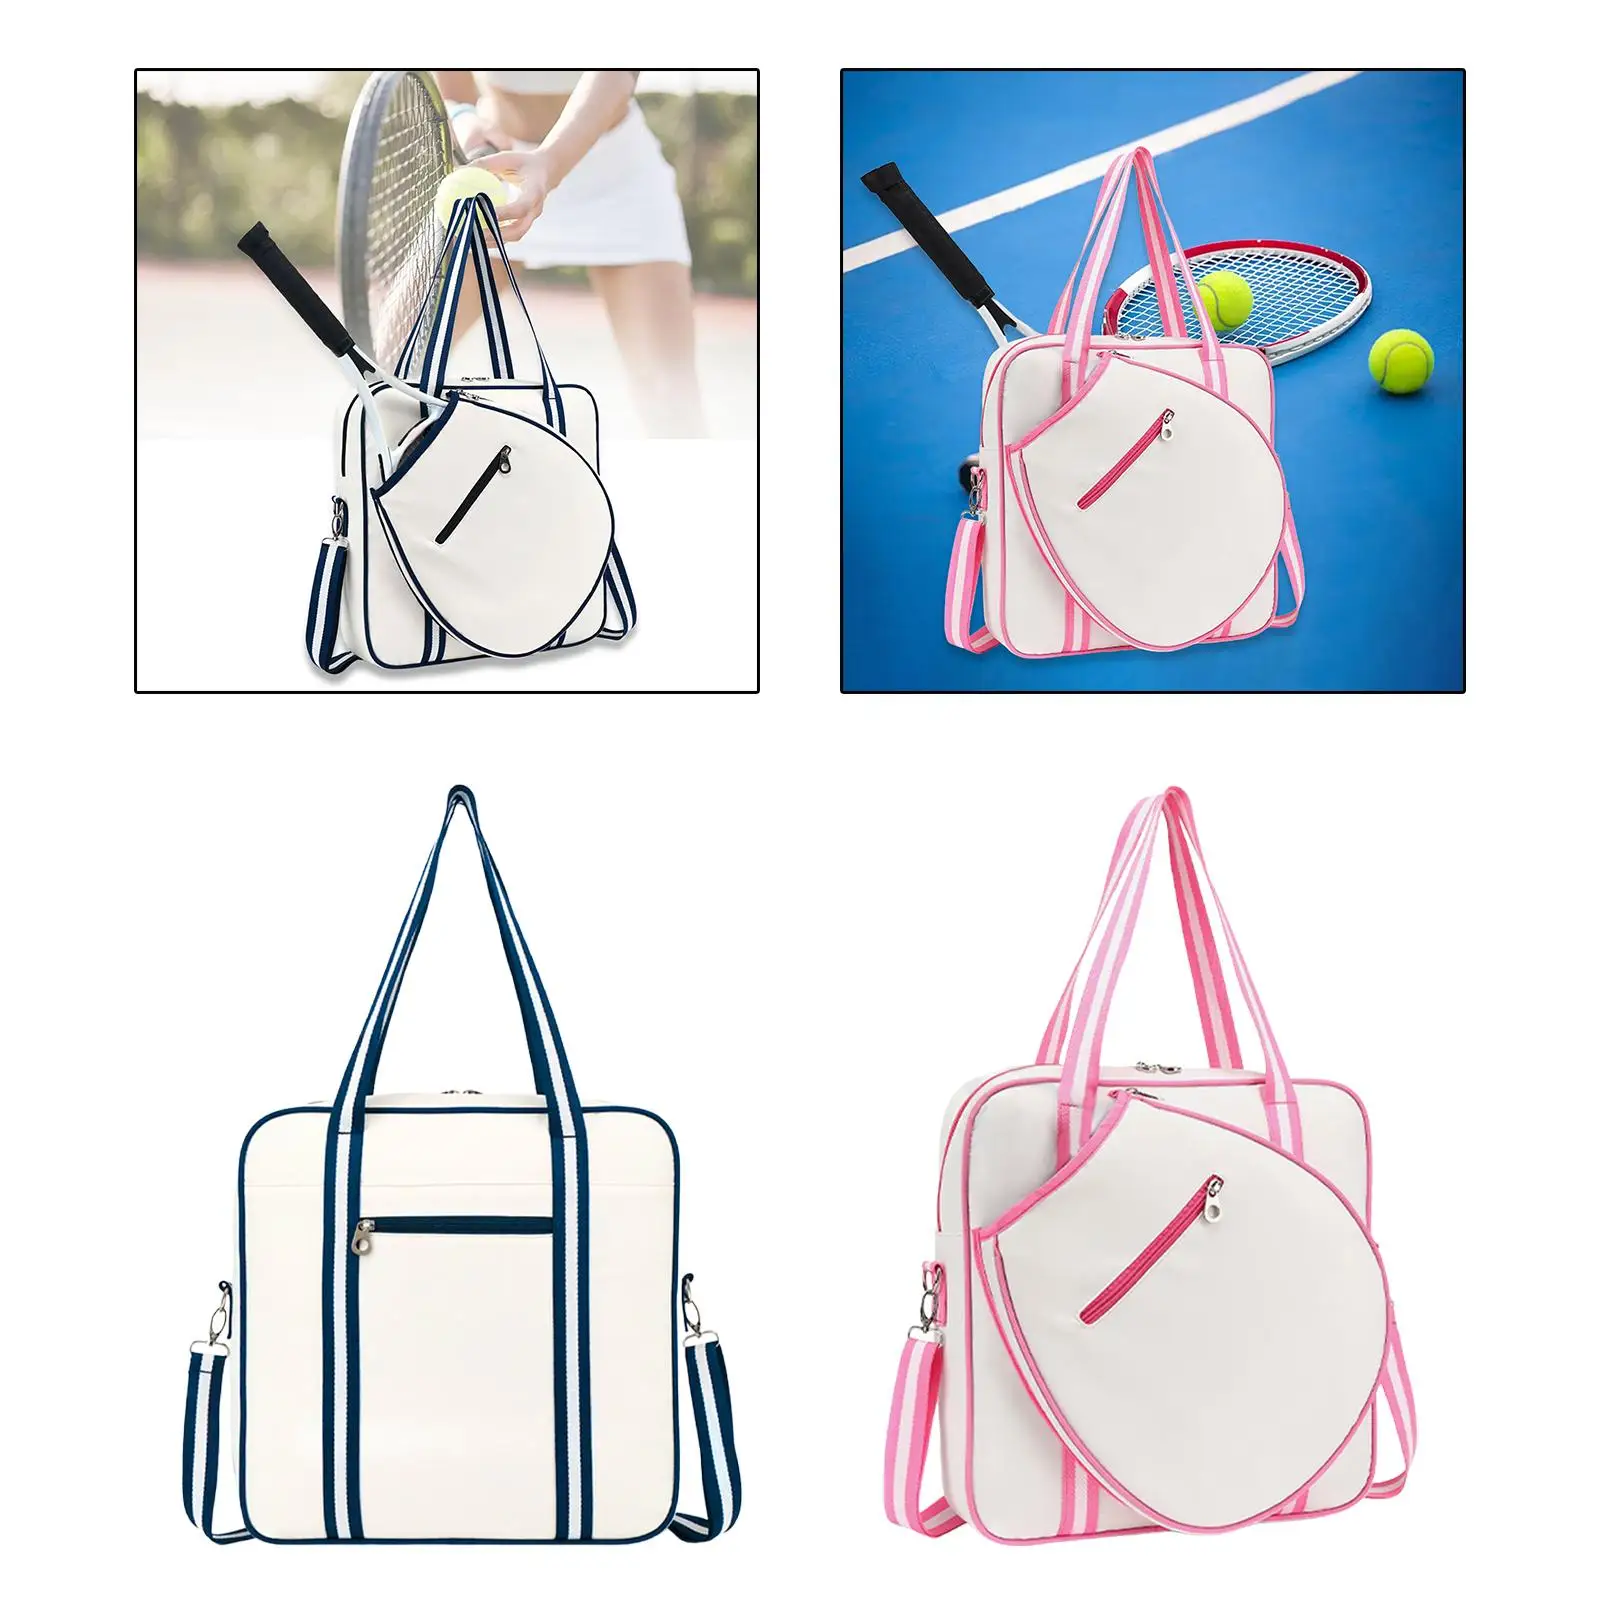 Tennis Shoulder Bag Travel Tote Bag Versatile Durable Stylish Waterproof Portable Crossbody Bag for Outdoor Activities